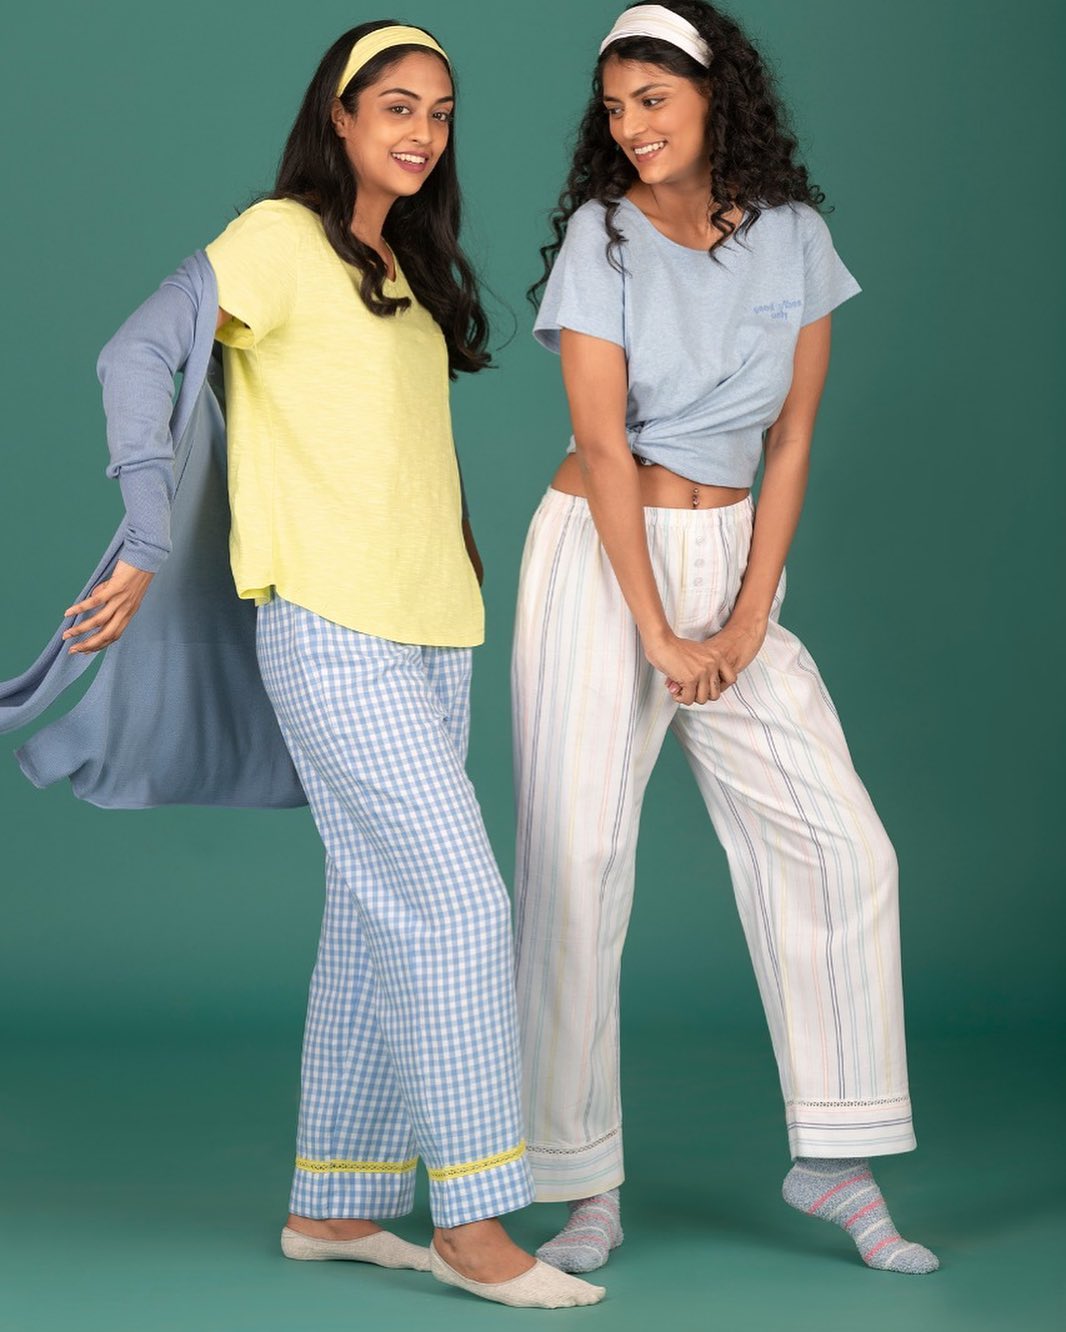 Two girls wearing nightwear and smiling